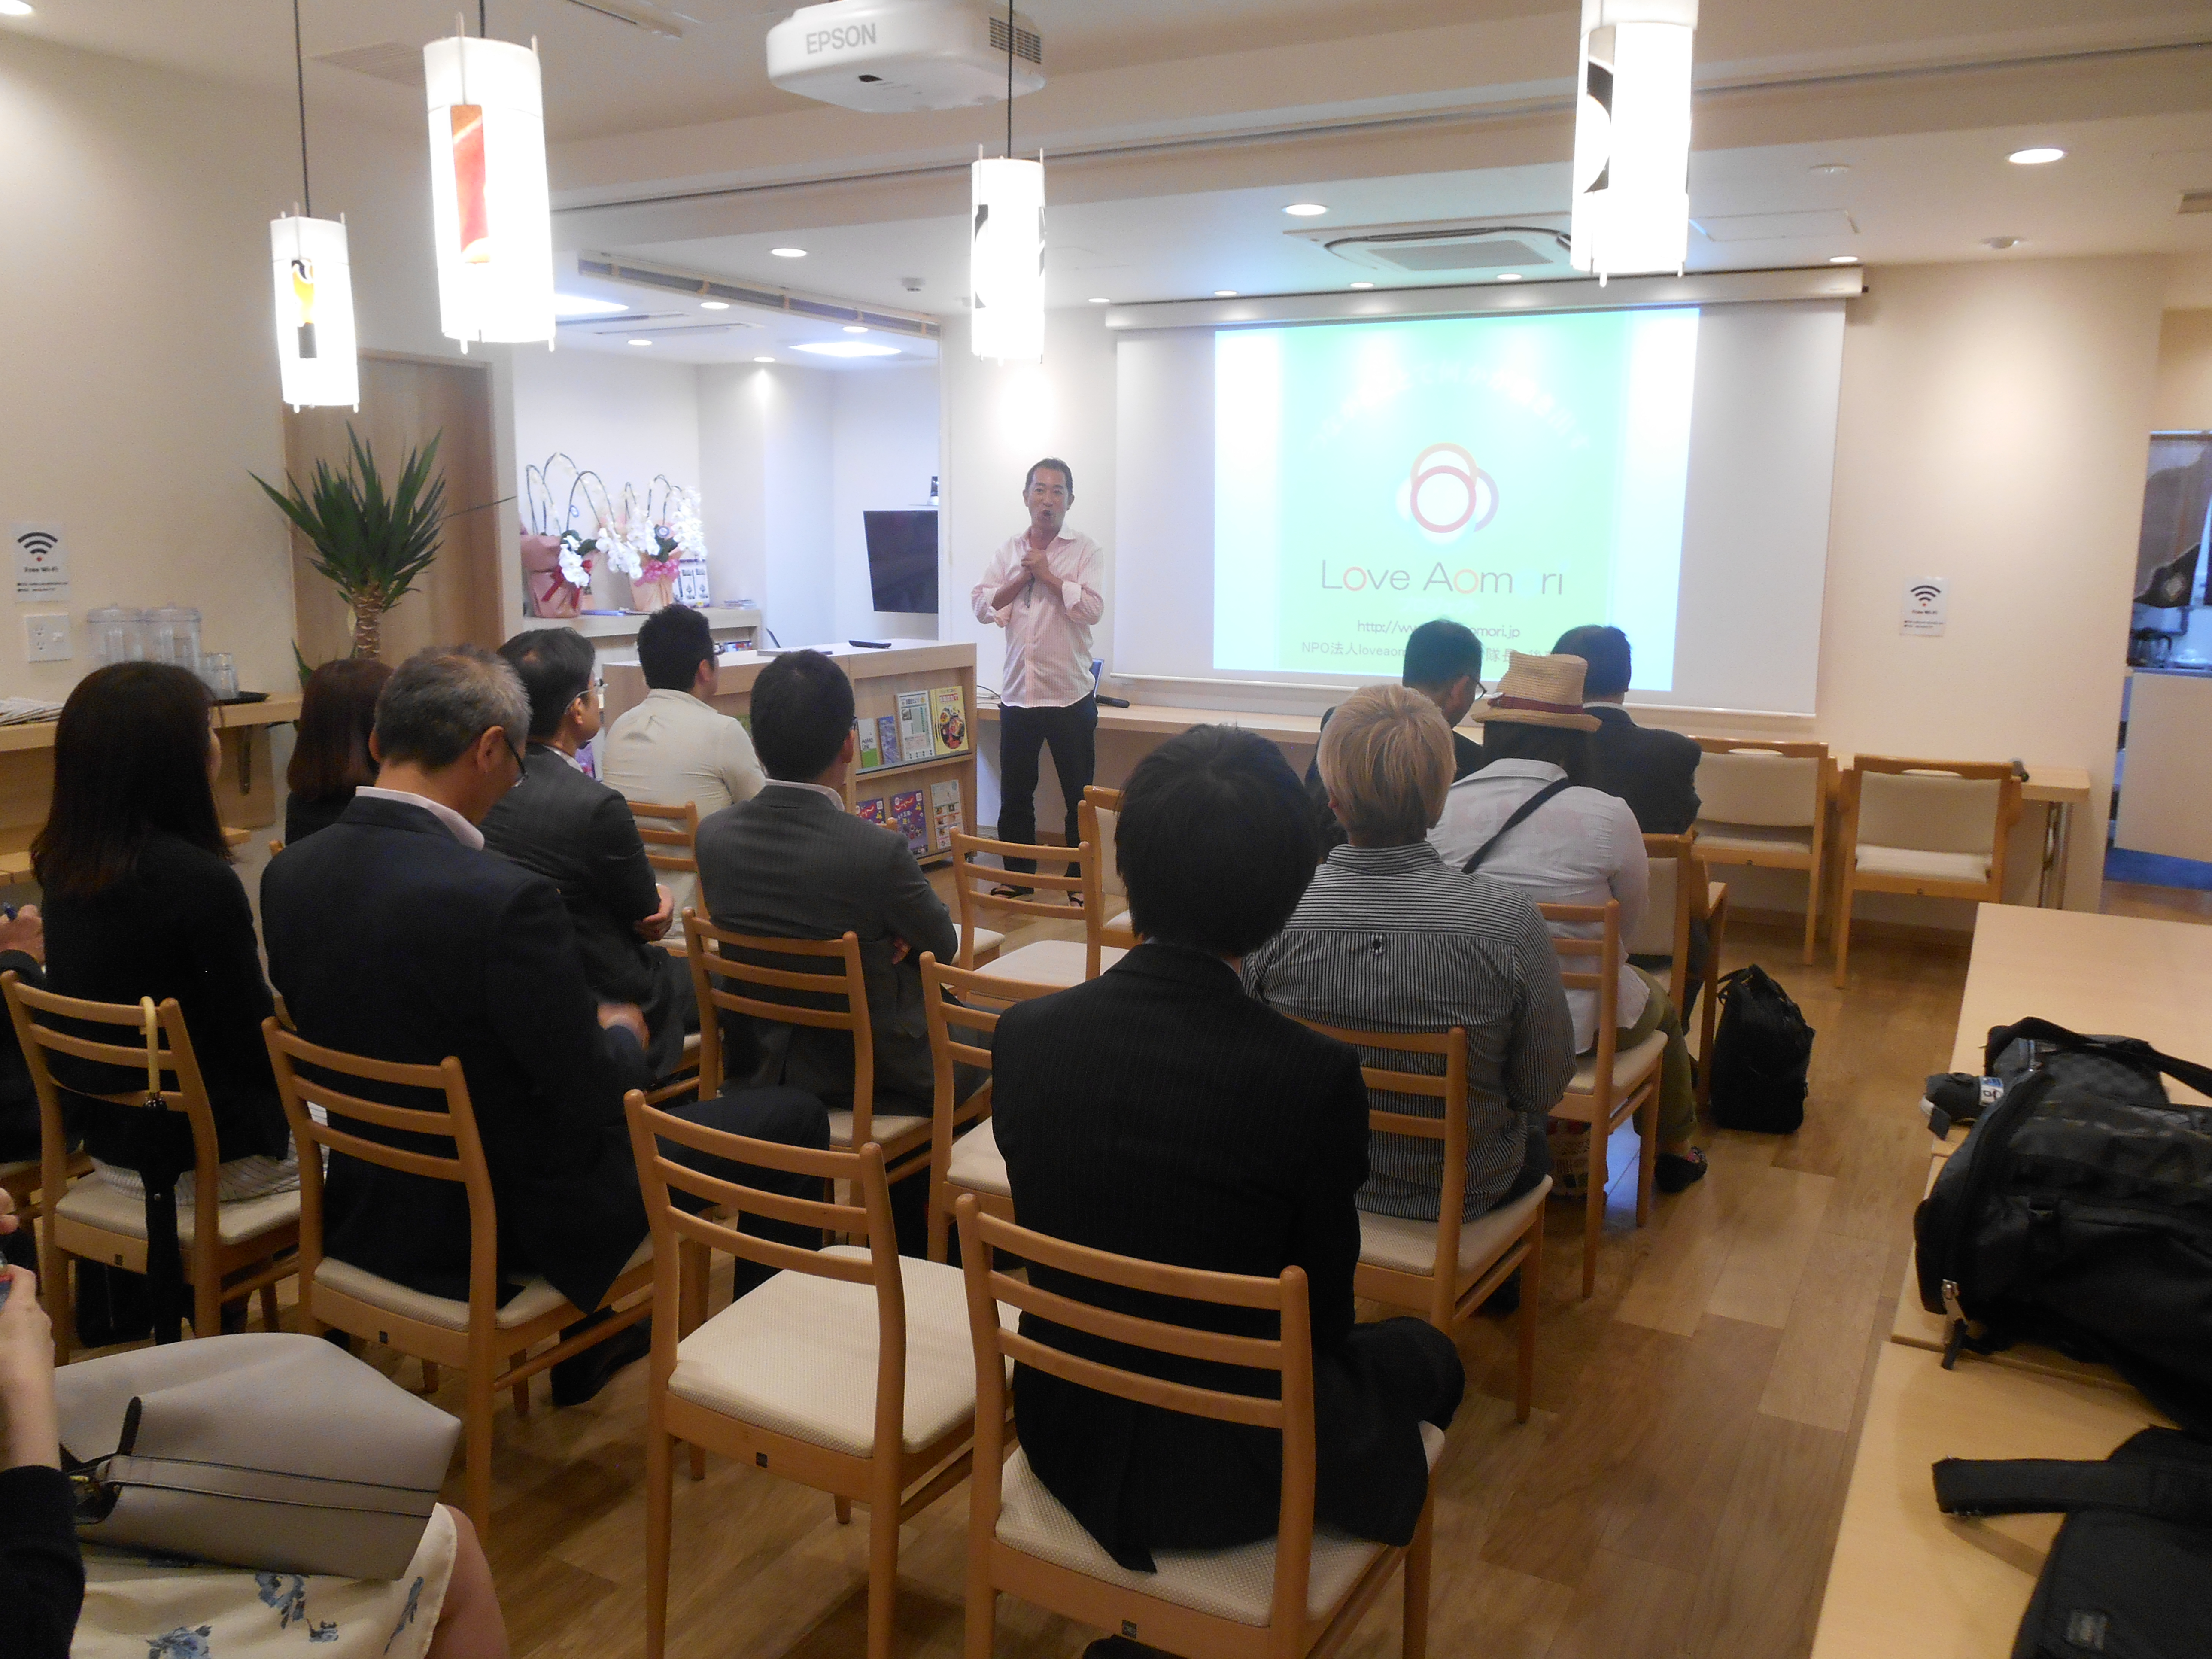 DSCN1664 2 - AoMoLink〜赤坂〜の第2回勉強会&交流会開催します。